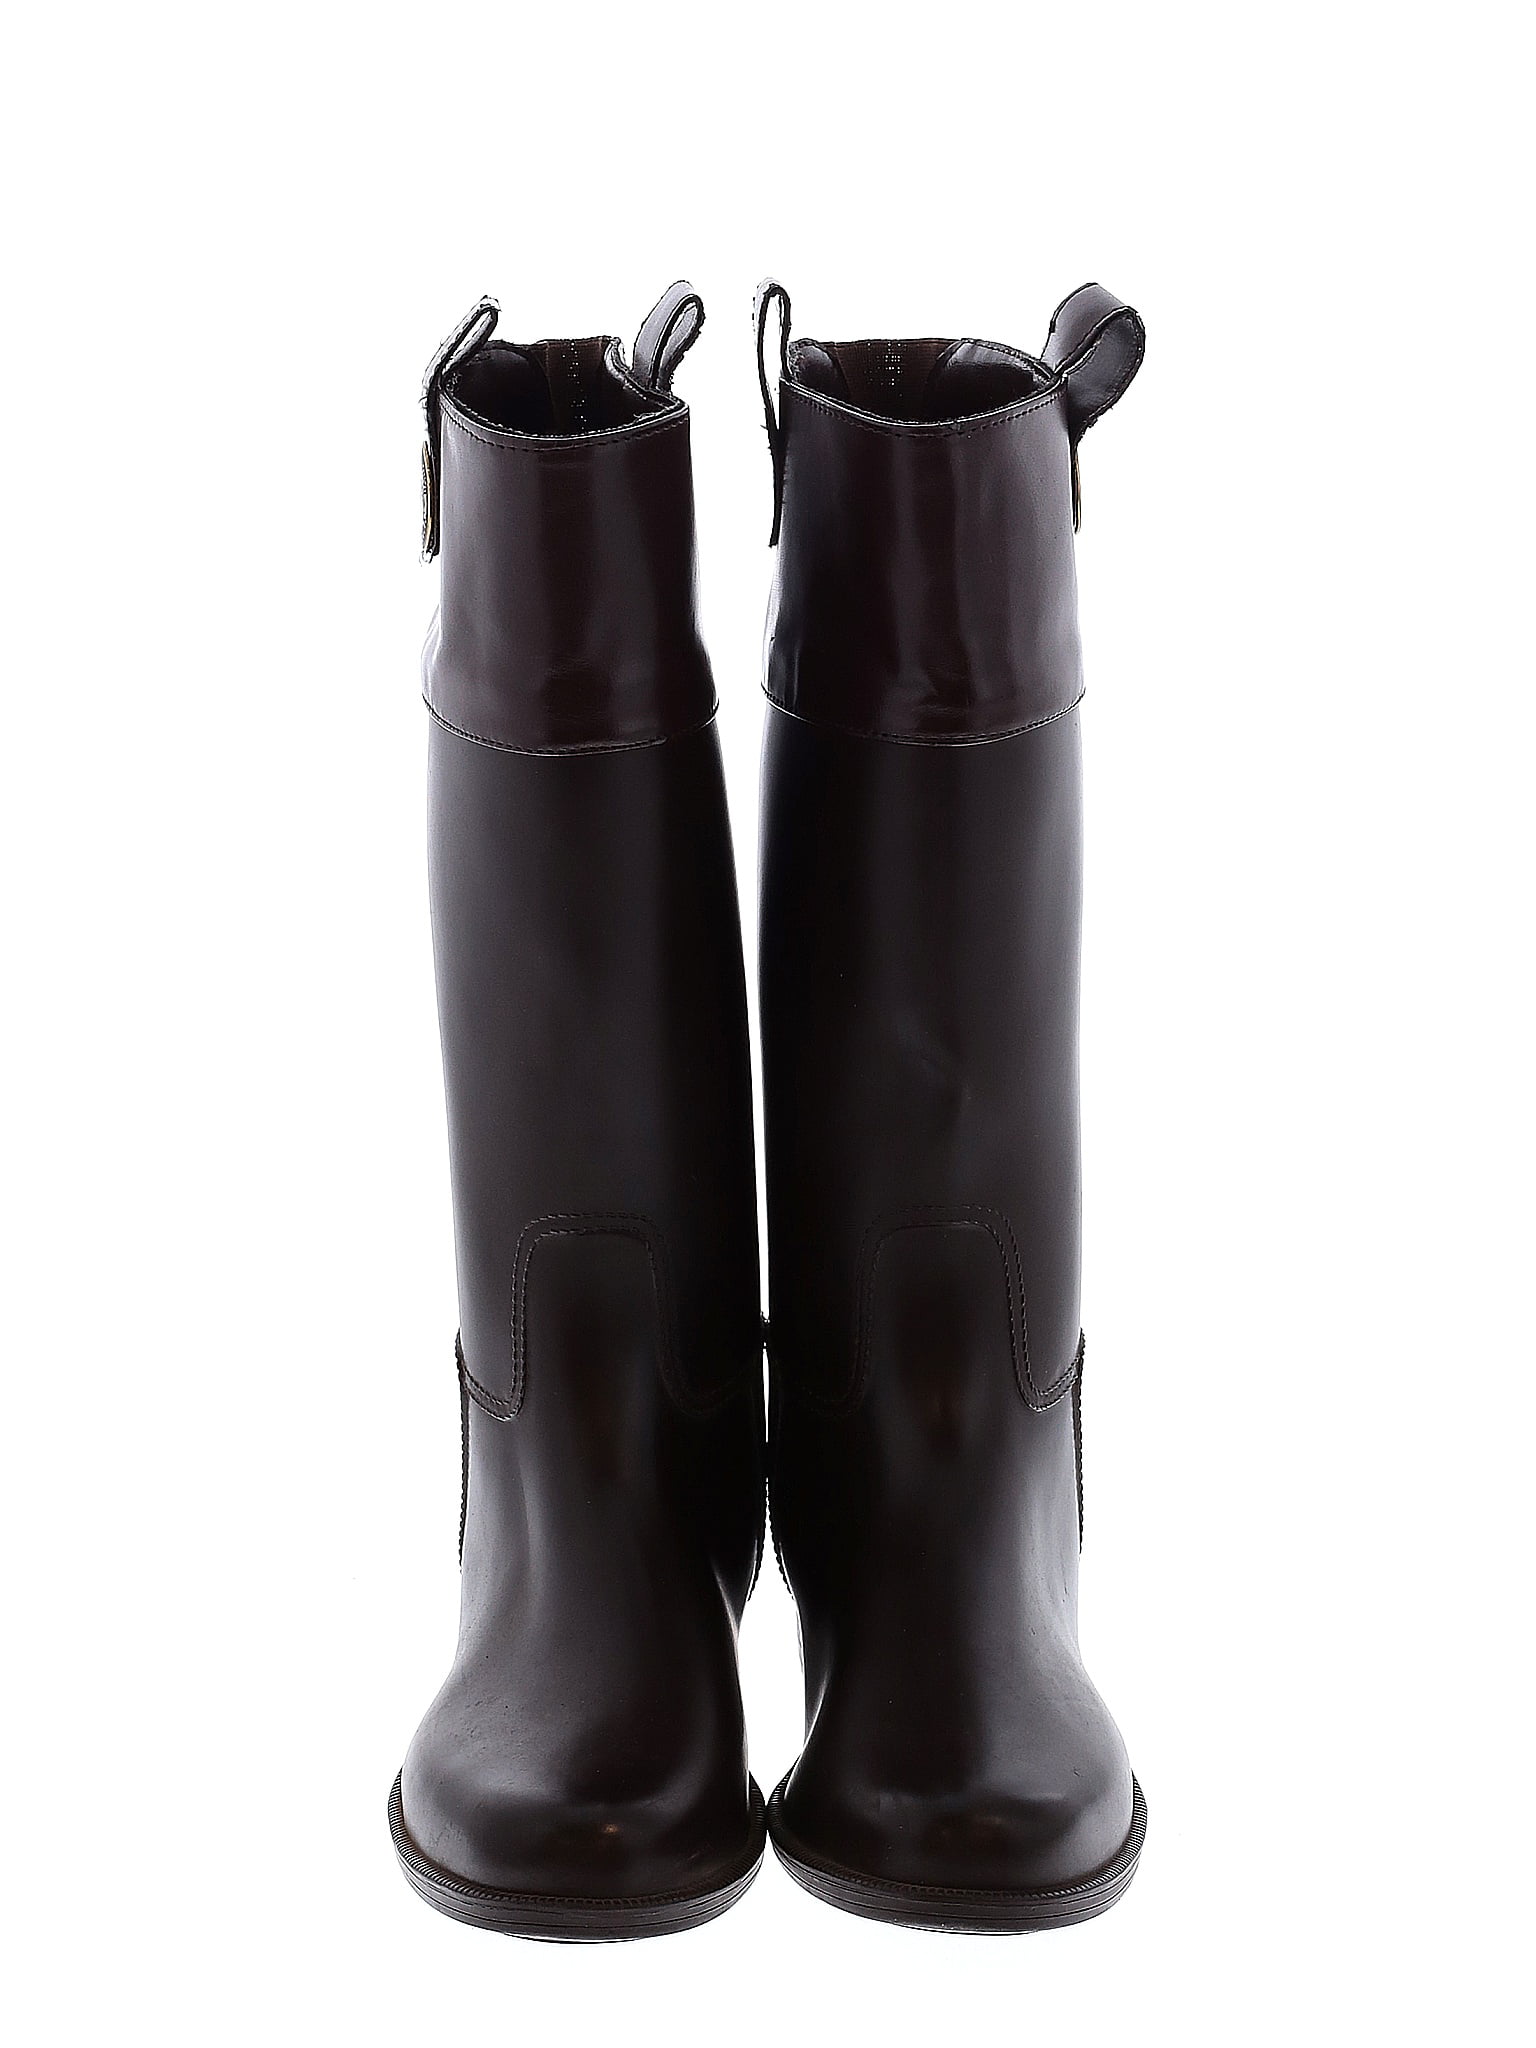 Pre-Owned Banana Republic Women's Size 7 Rain Boots - Walmart.com